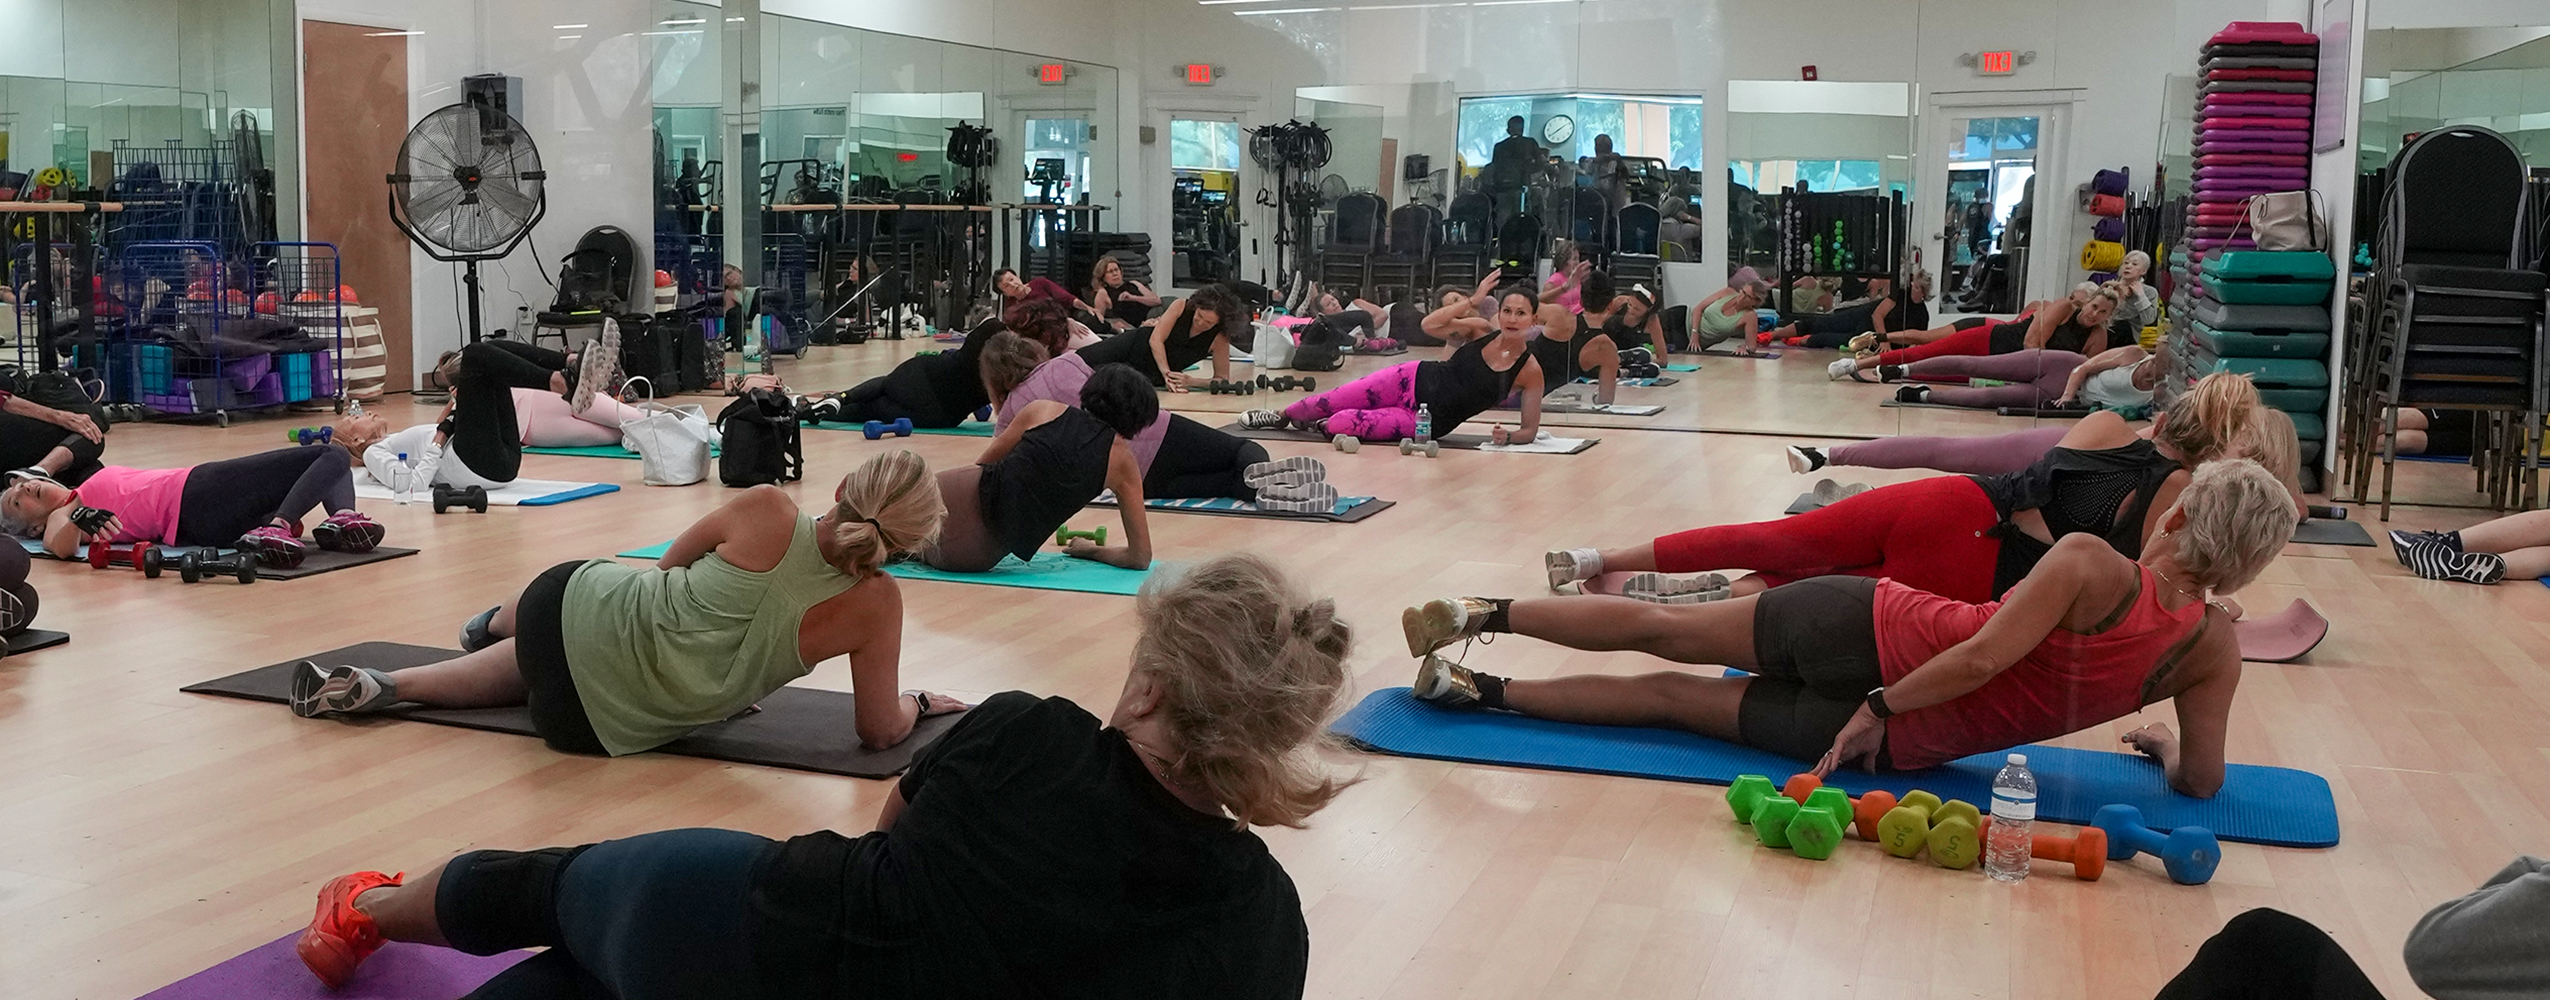 Group Fitness Classes - Palm Beach Gym - Boca Raton Fitness Center